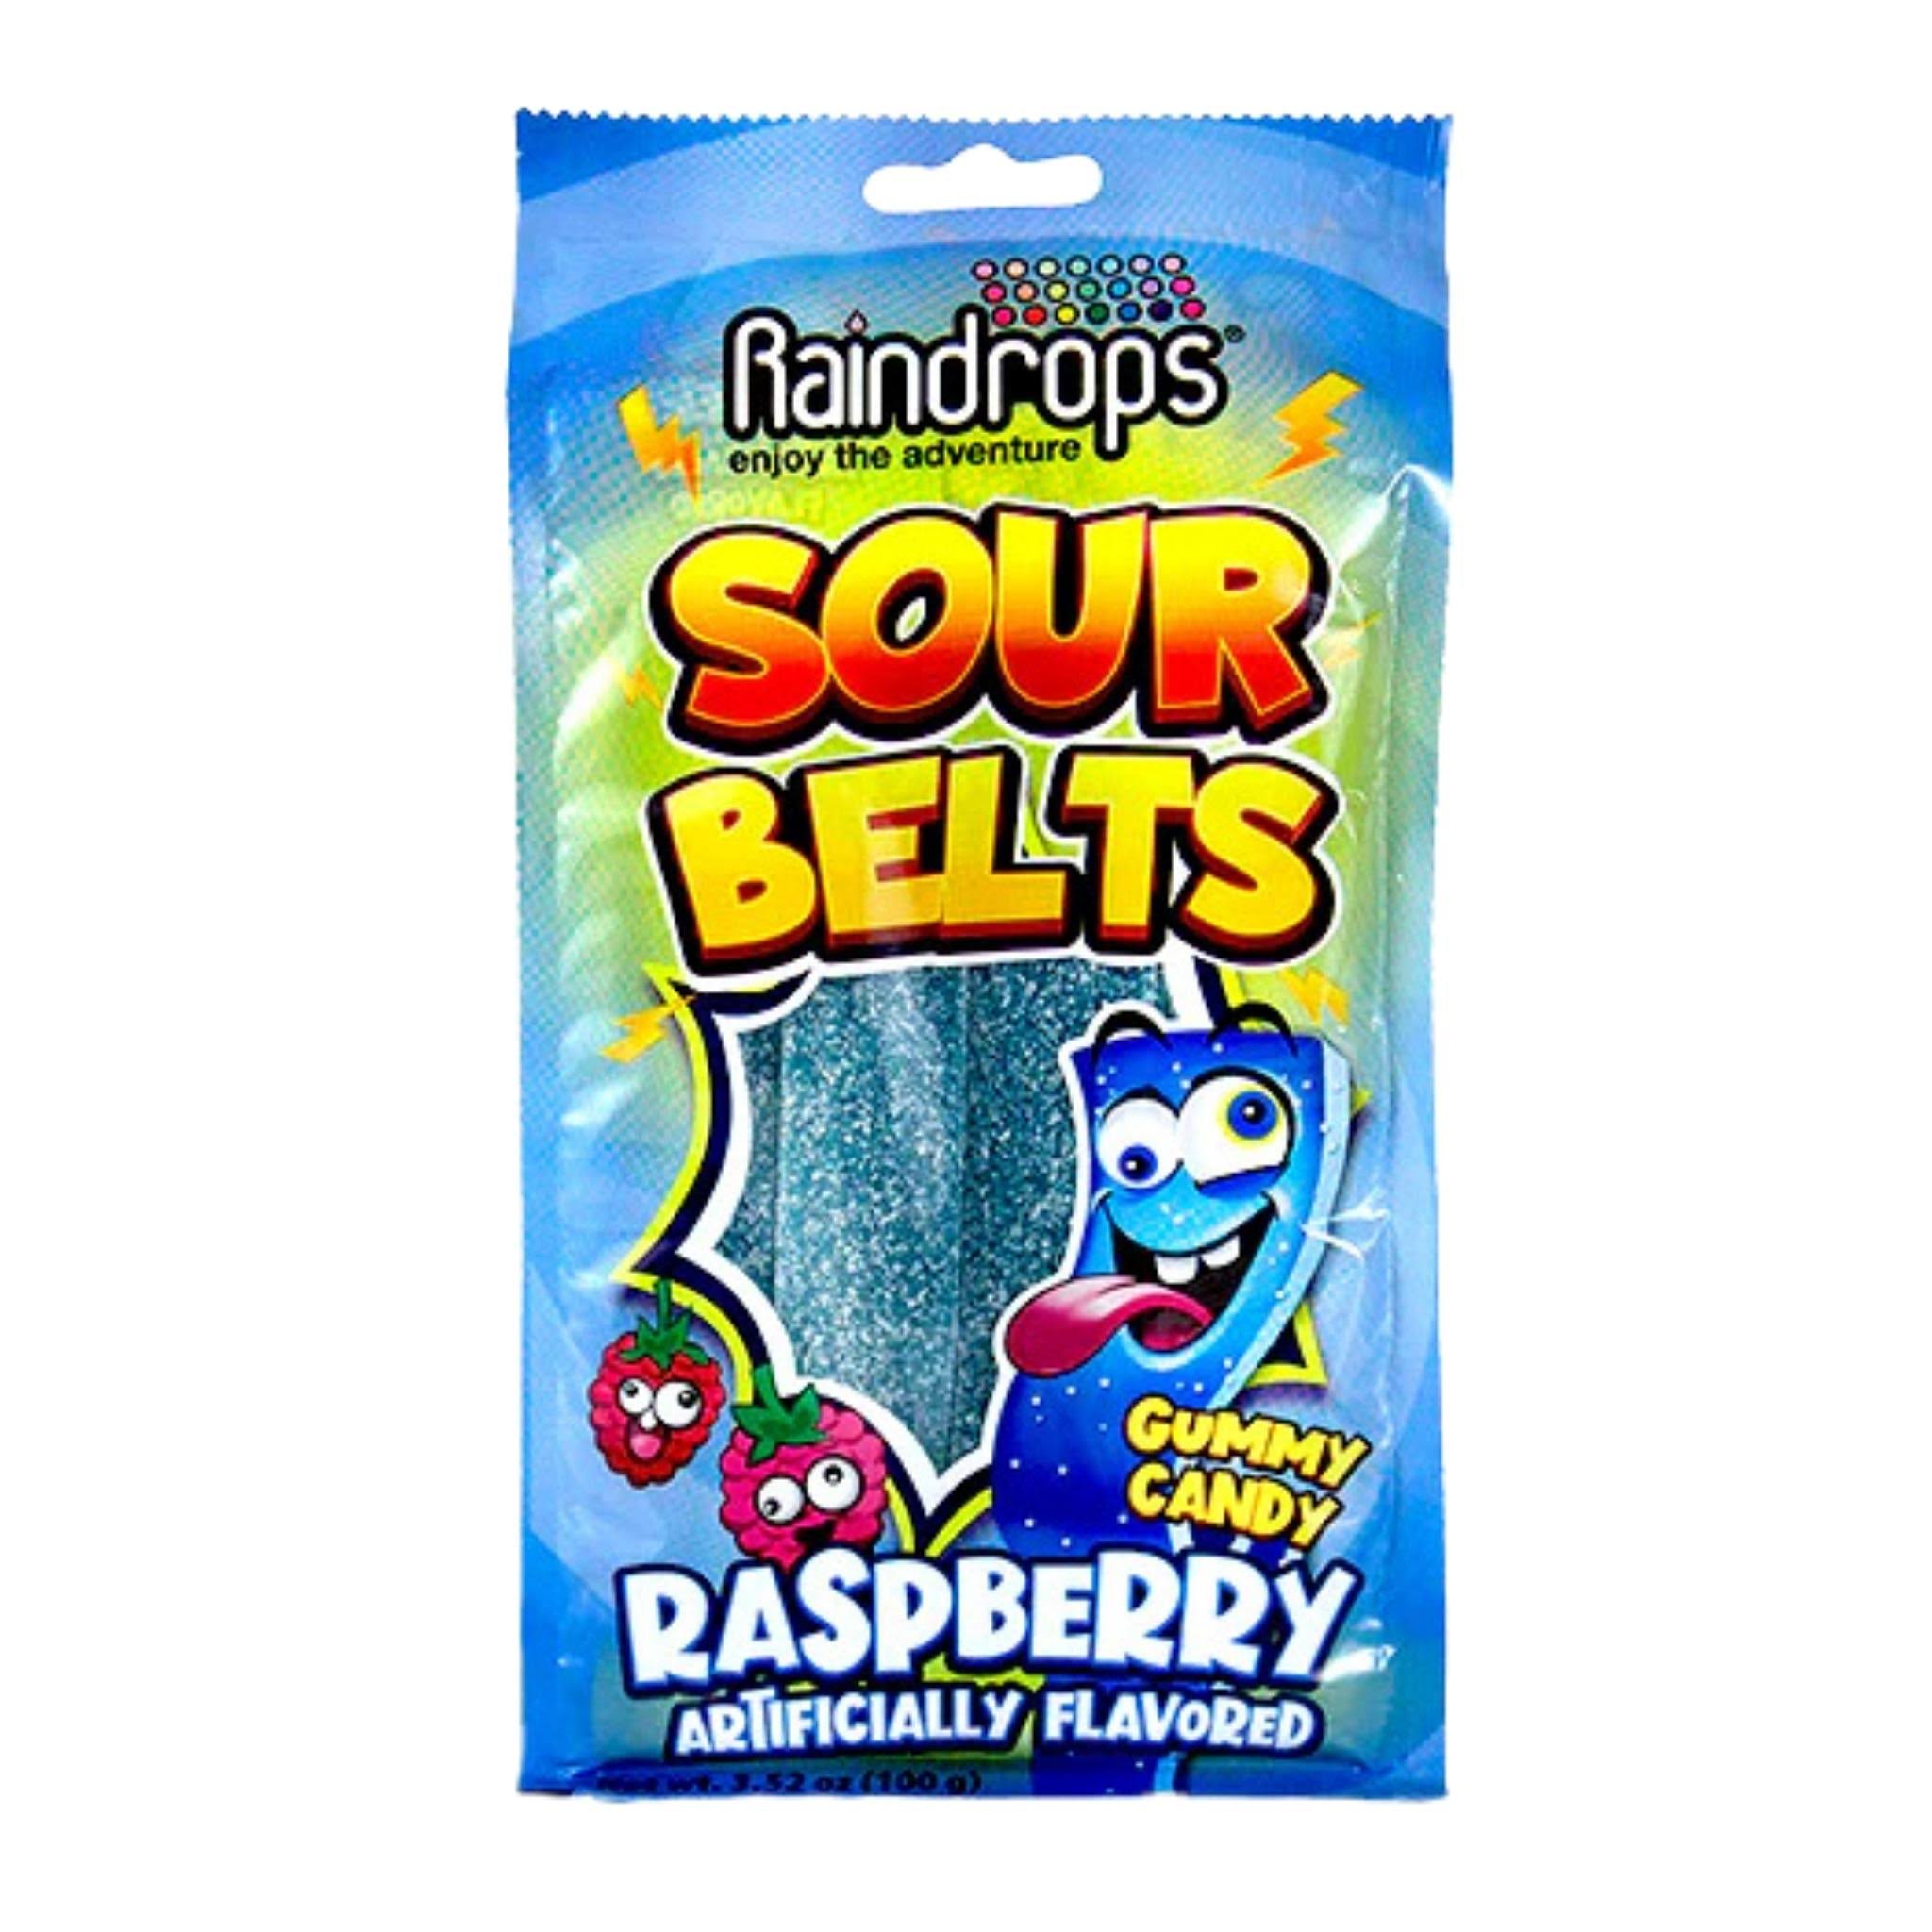 Raindrops - Blue Raspberry Sour Belts Gummy Candy, 3.52 oz.